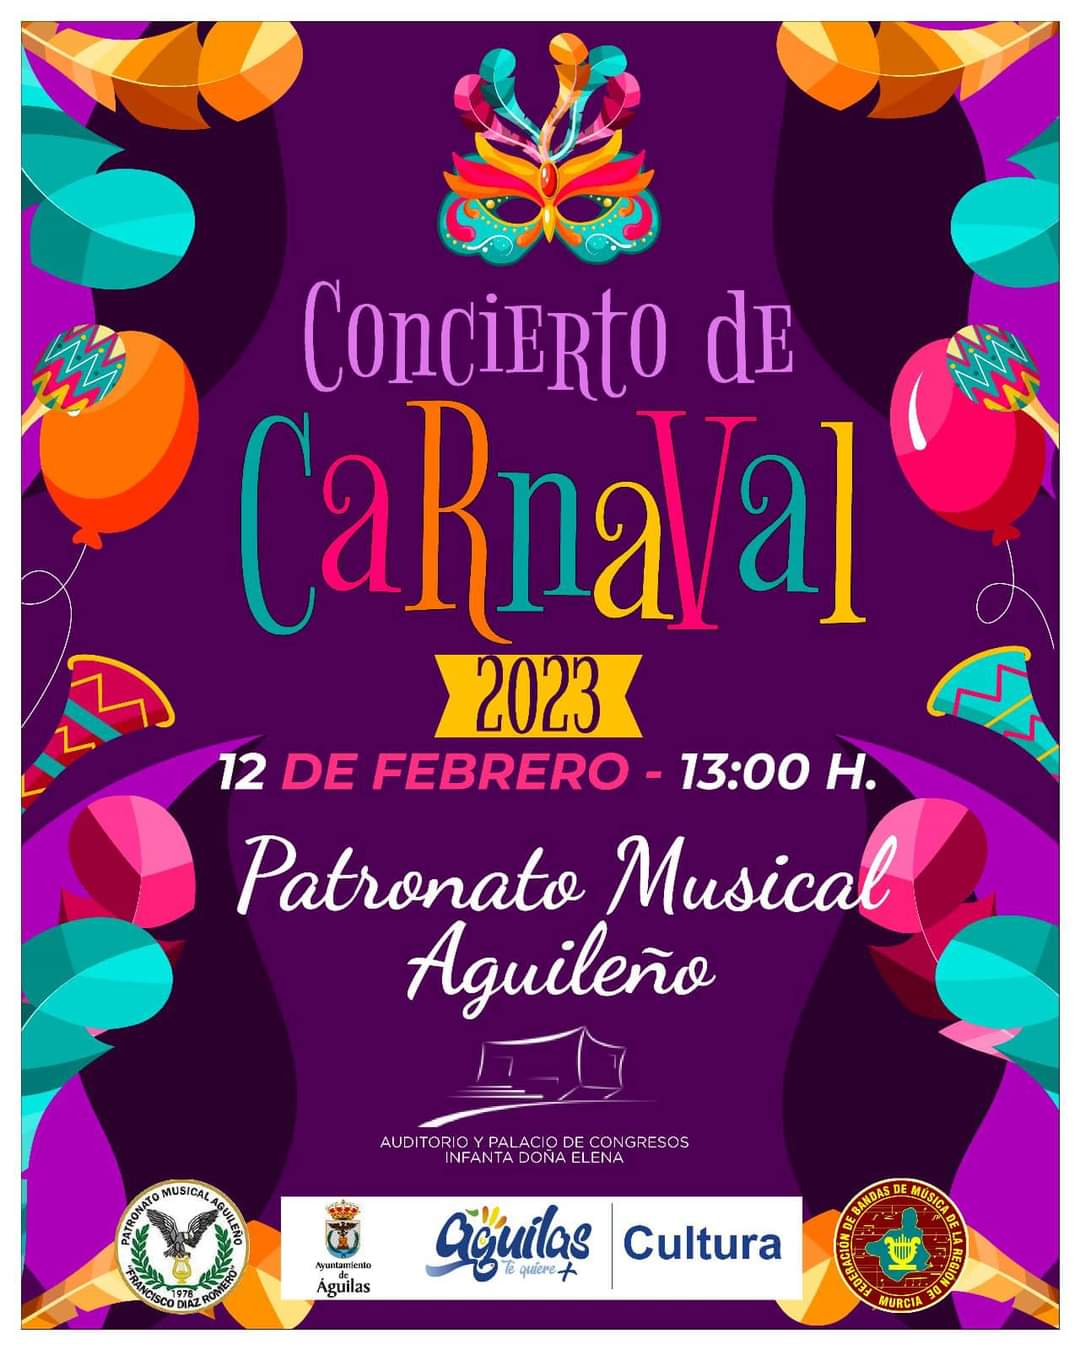 Concierto de Carnaval 2023 - Patronato Musical Aguileño